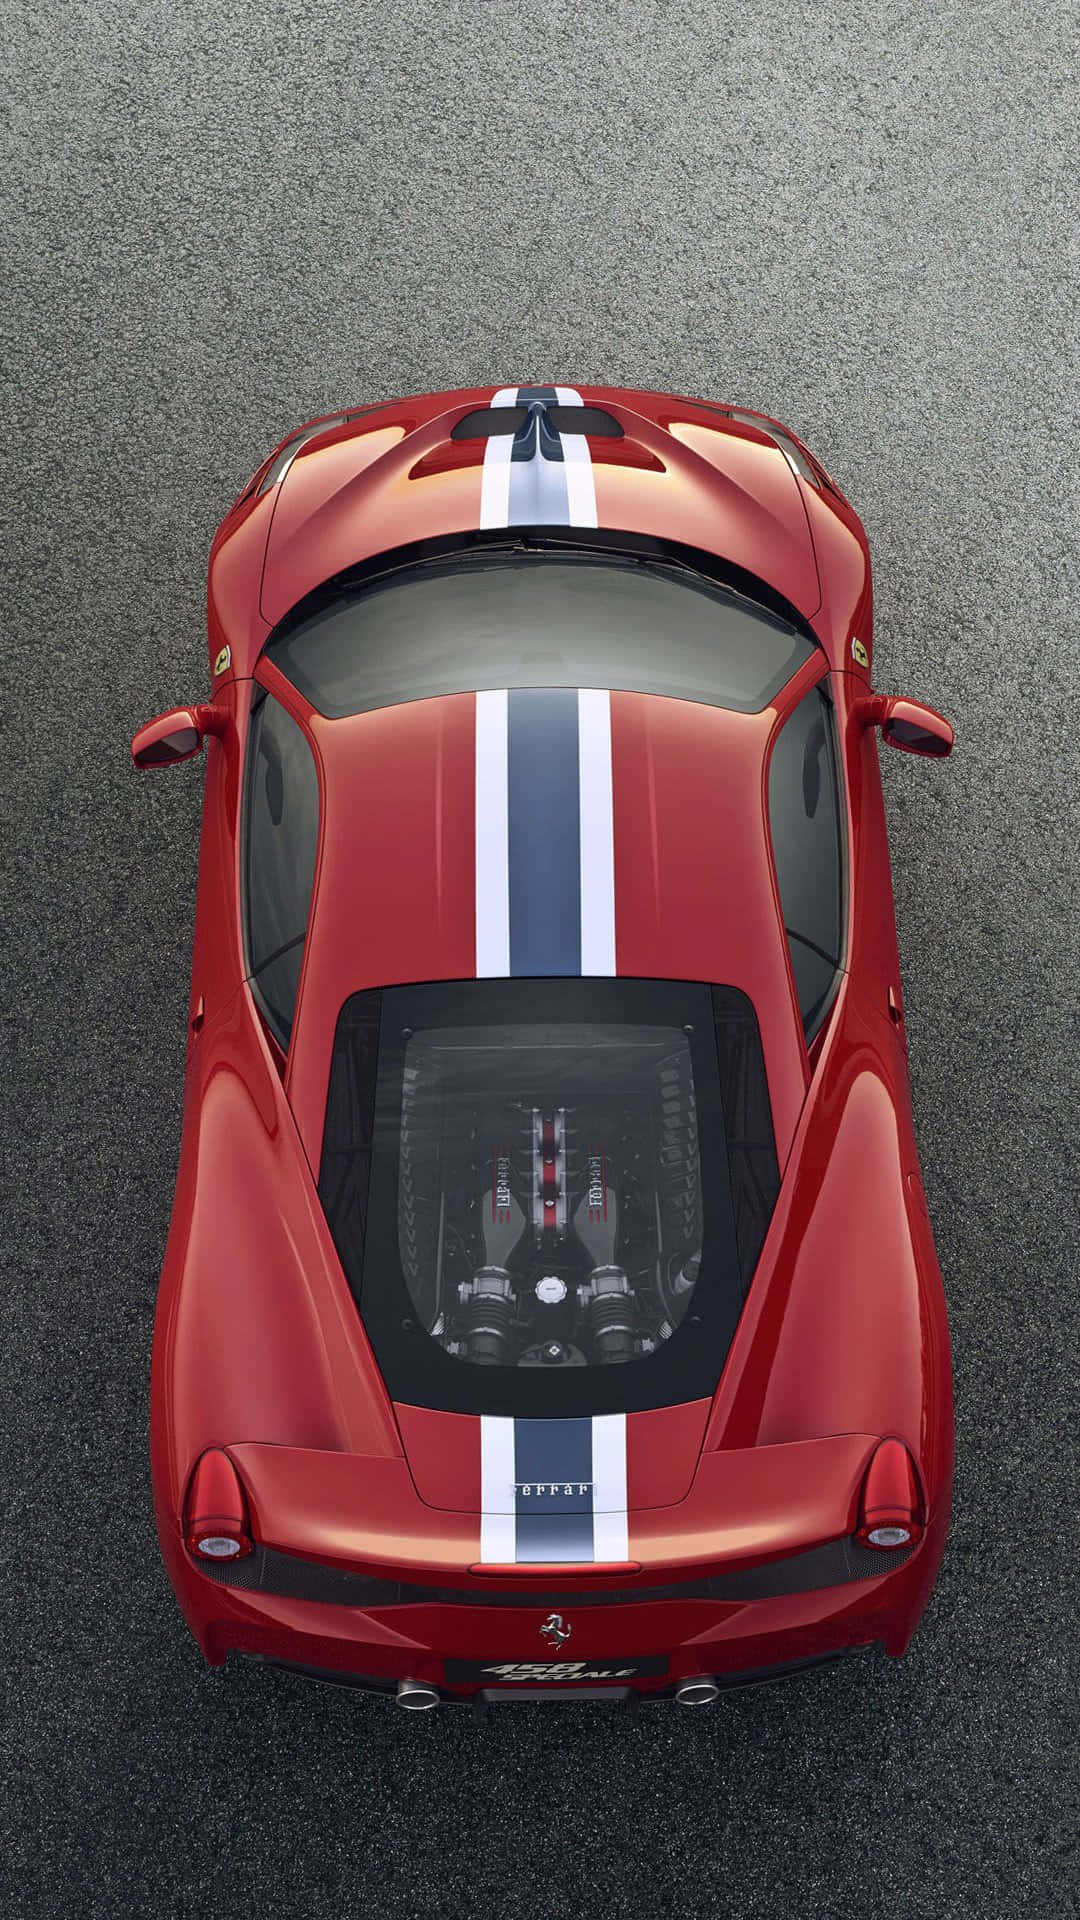 Stunning Ferrari 458 Speciale in Action Wallpaper